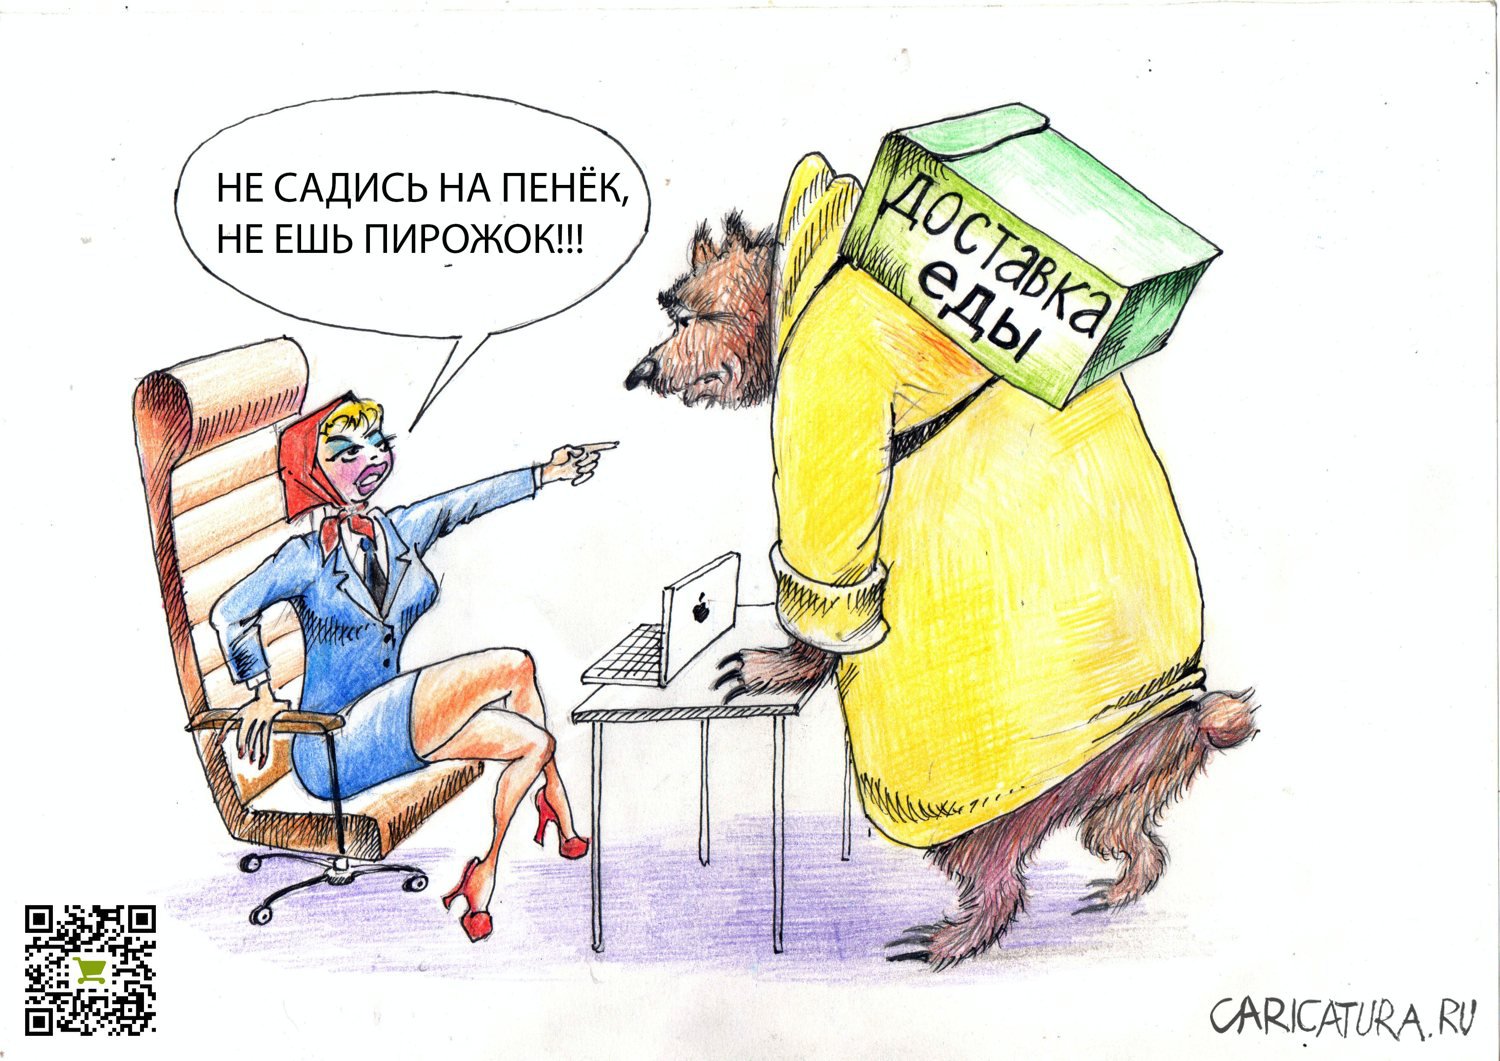 Карикатура "Доставка еды", Александр Шульпинов